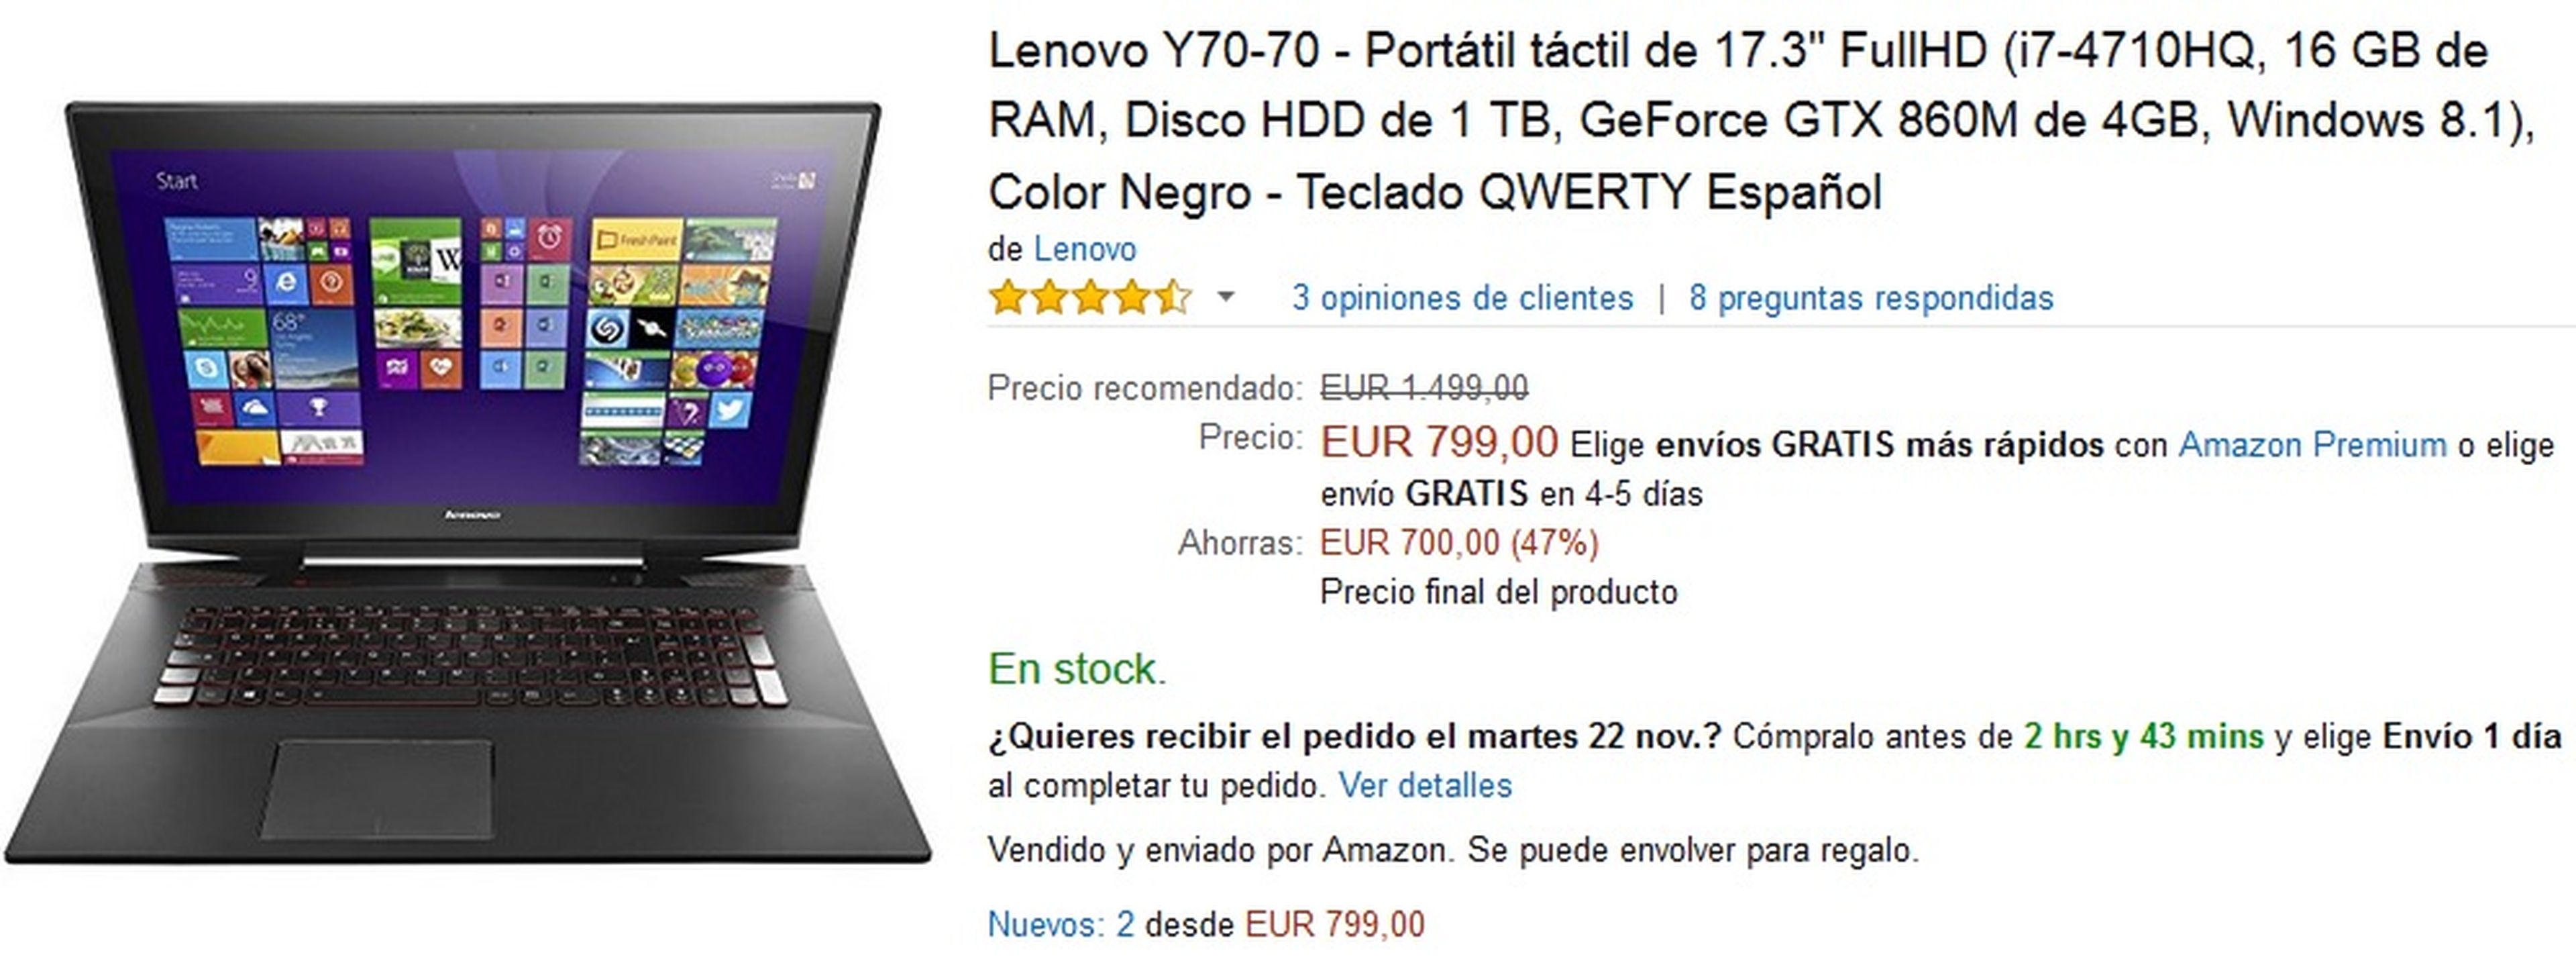 Portátil Lenovo Y70-70 por 799 €